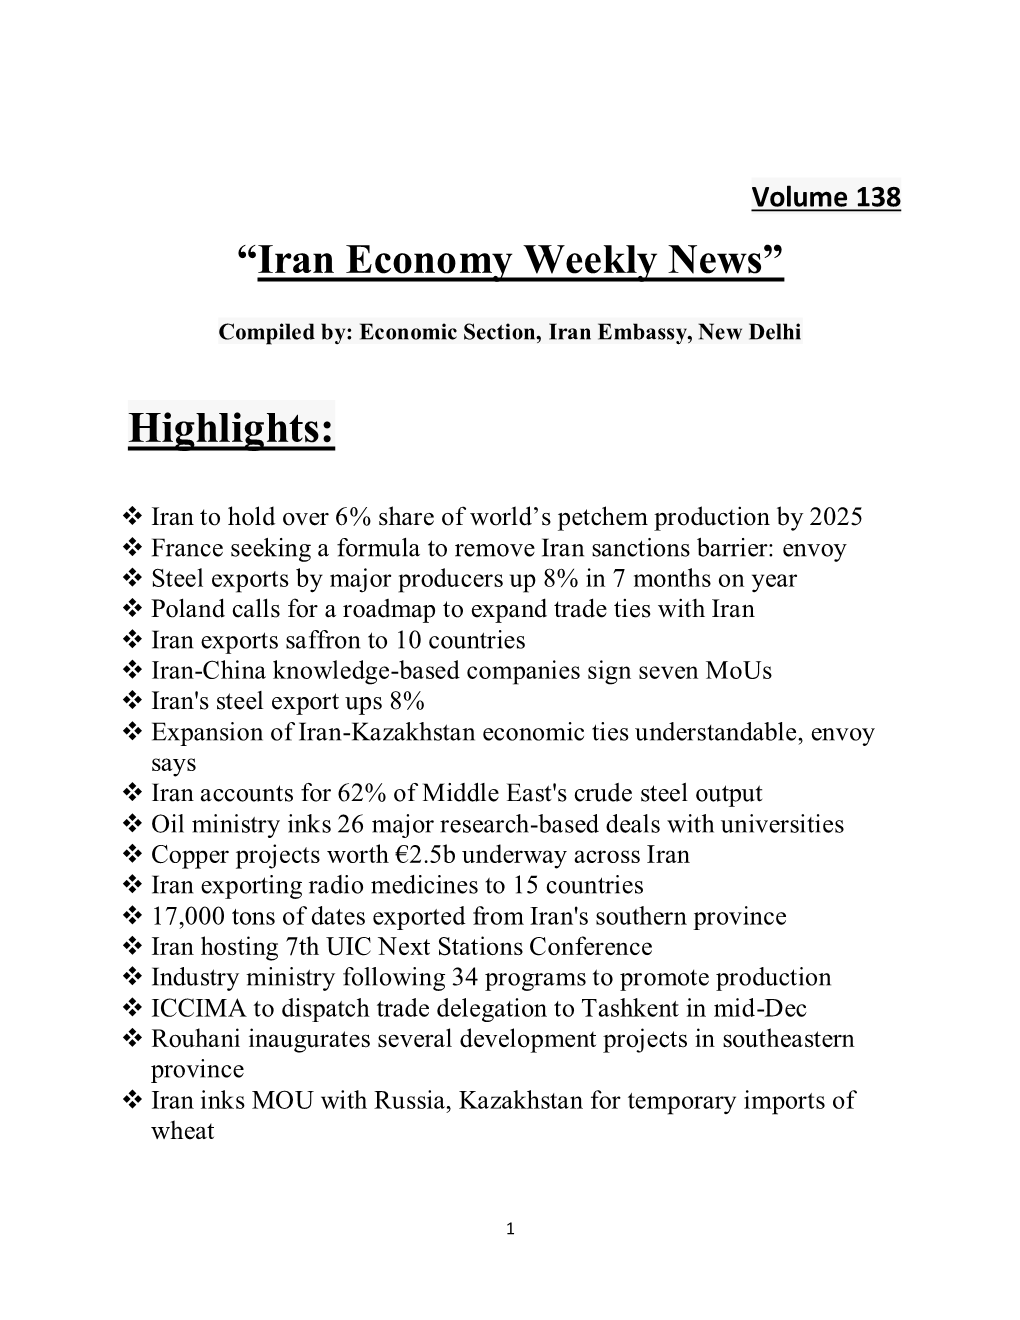 Iran Economy Weekly News”